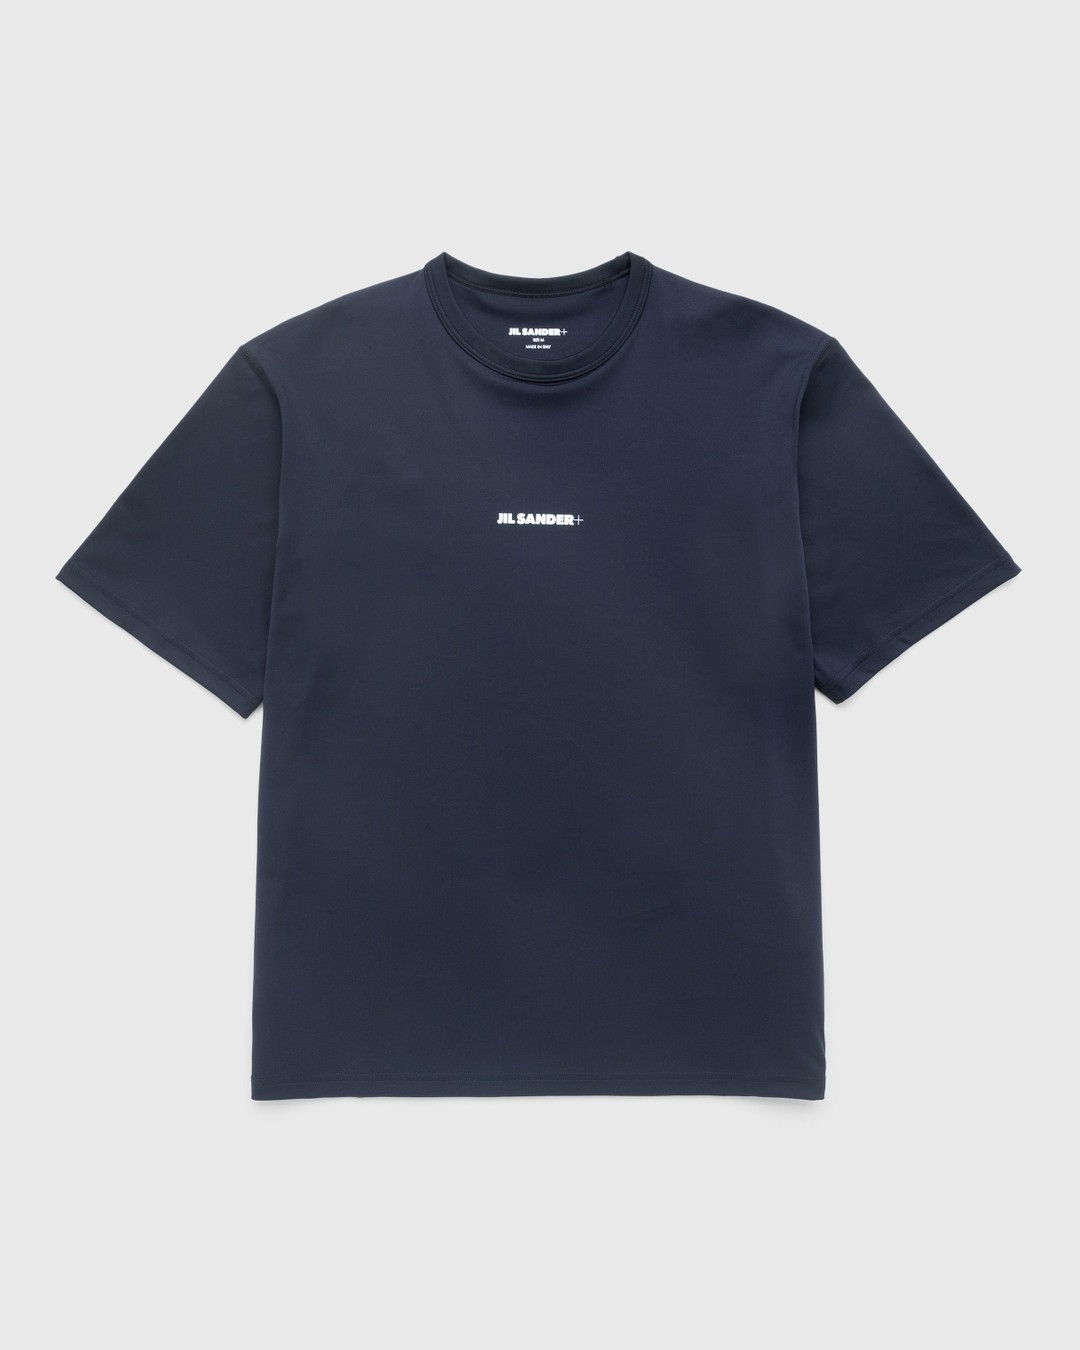 Jil Sander – Logo T-Shirt Black - T-shirts - Black - Image 1